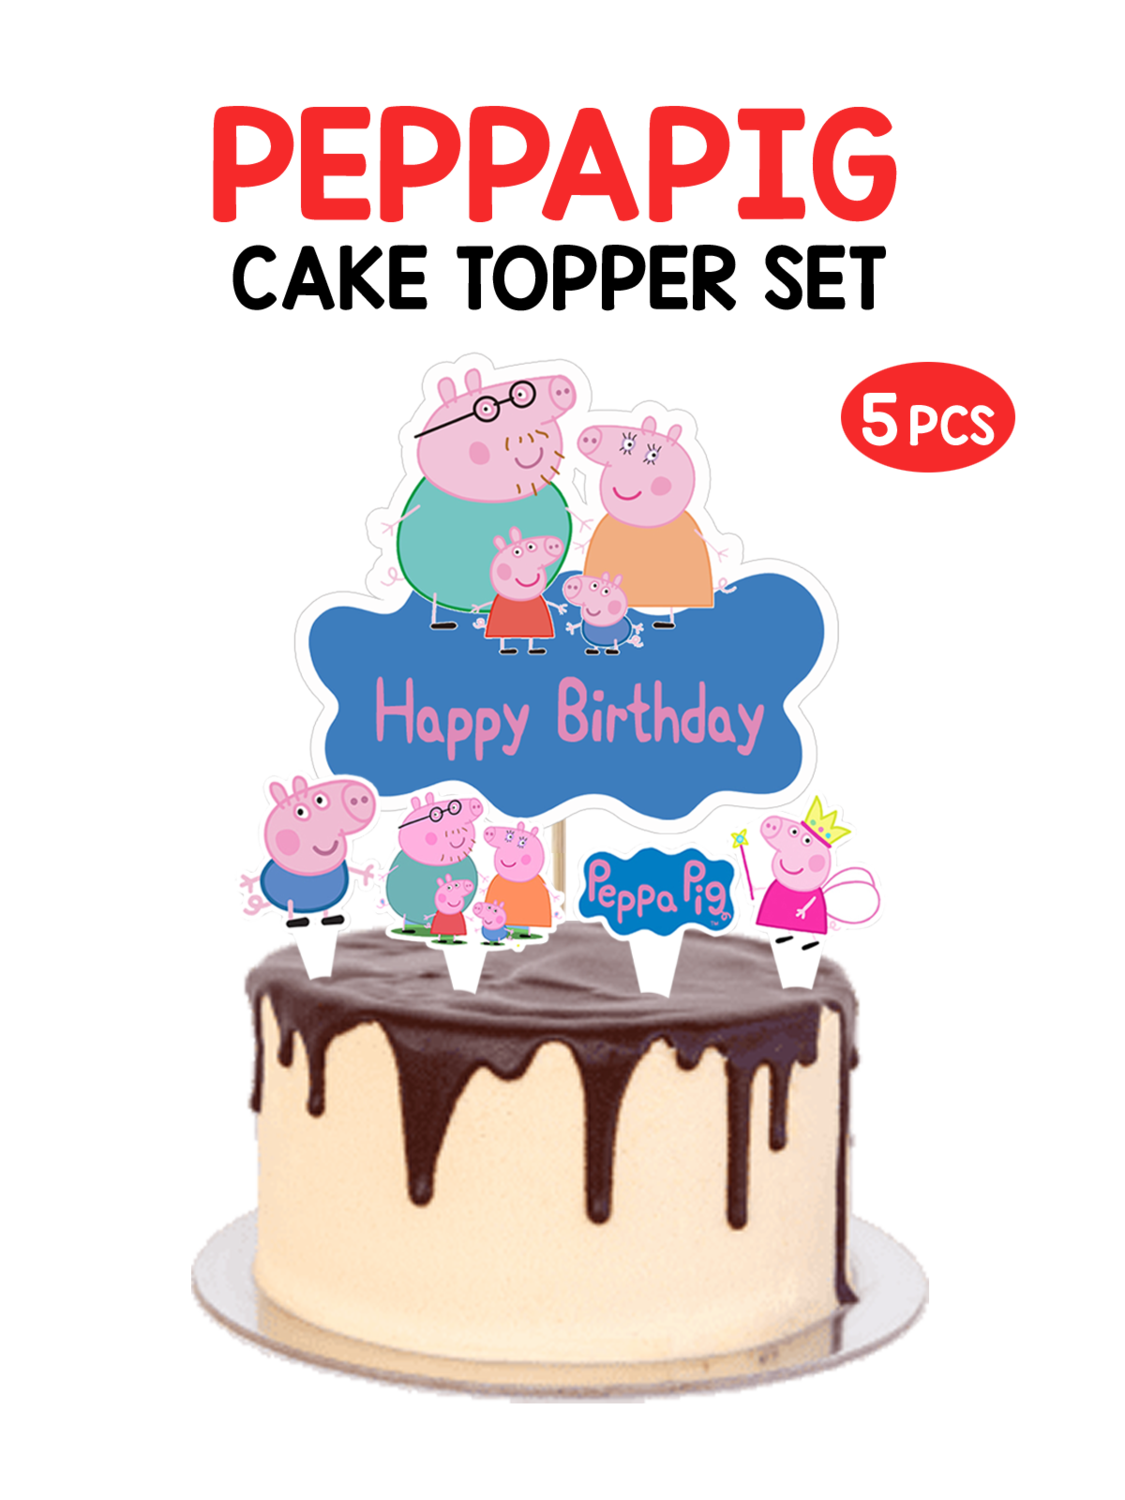 Peppa Pig - Cake Topper 5pcs Set